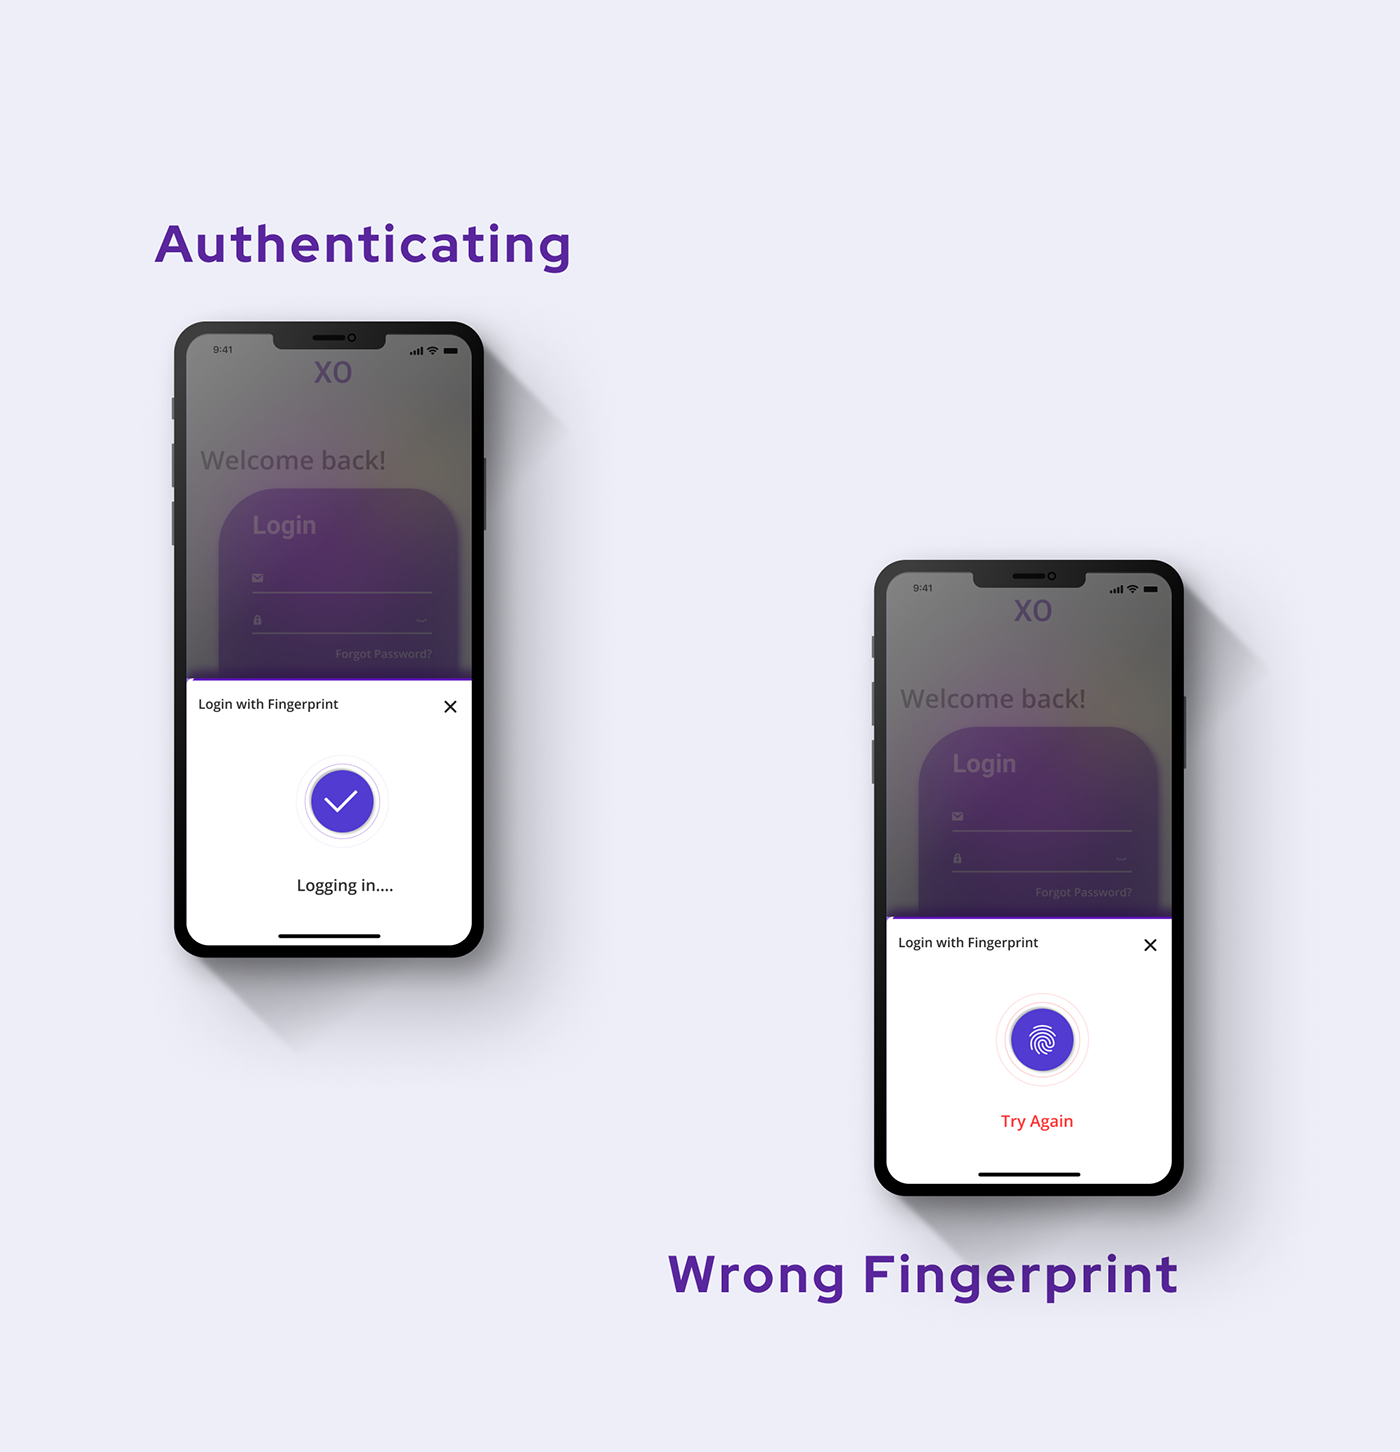 DK fingerprint fingerprint login Lockscreen login screen Mobile app Password ui design